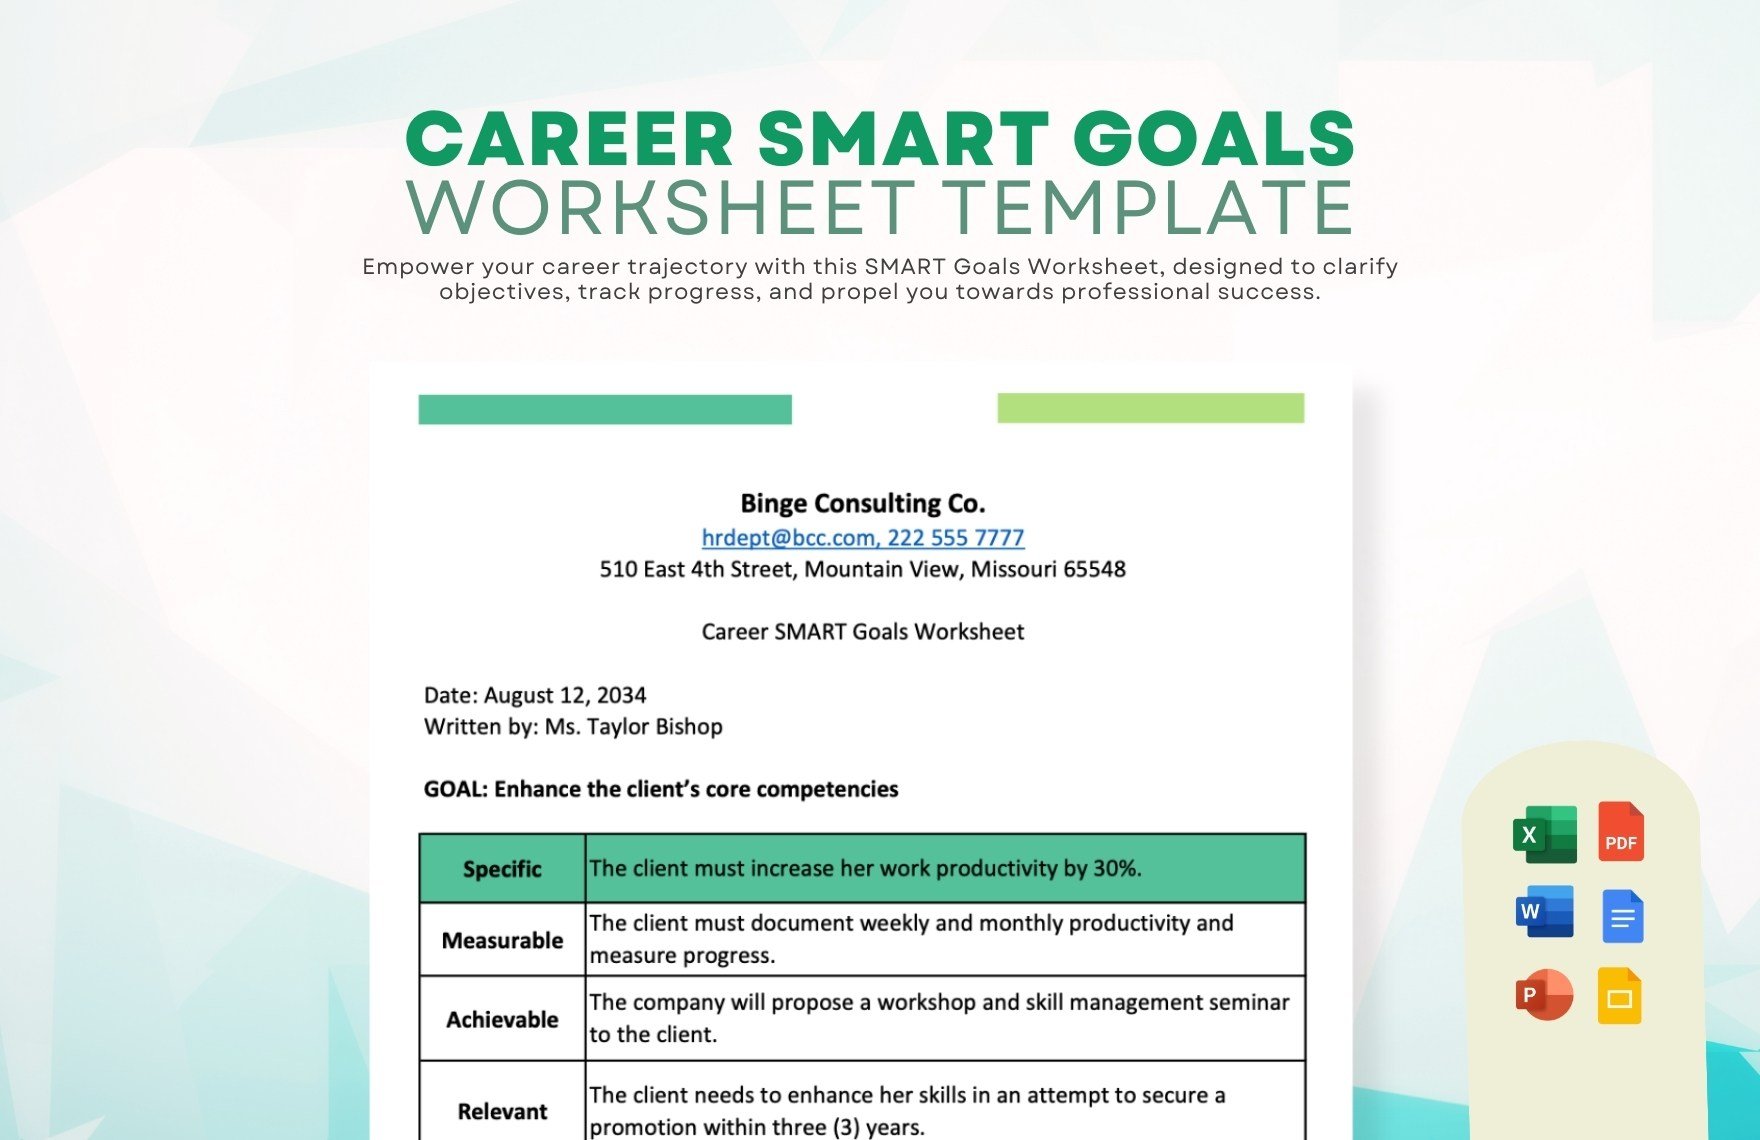 Career Smart Goals Worksheet Template in Word, Google Docs, Excel, PDF, PowerPoint, Google Slides